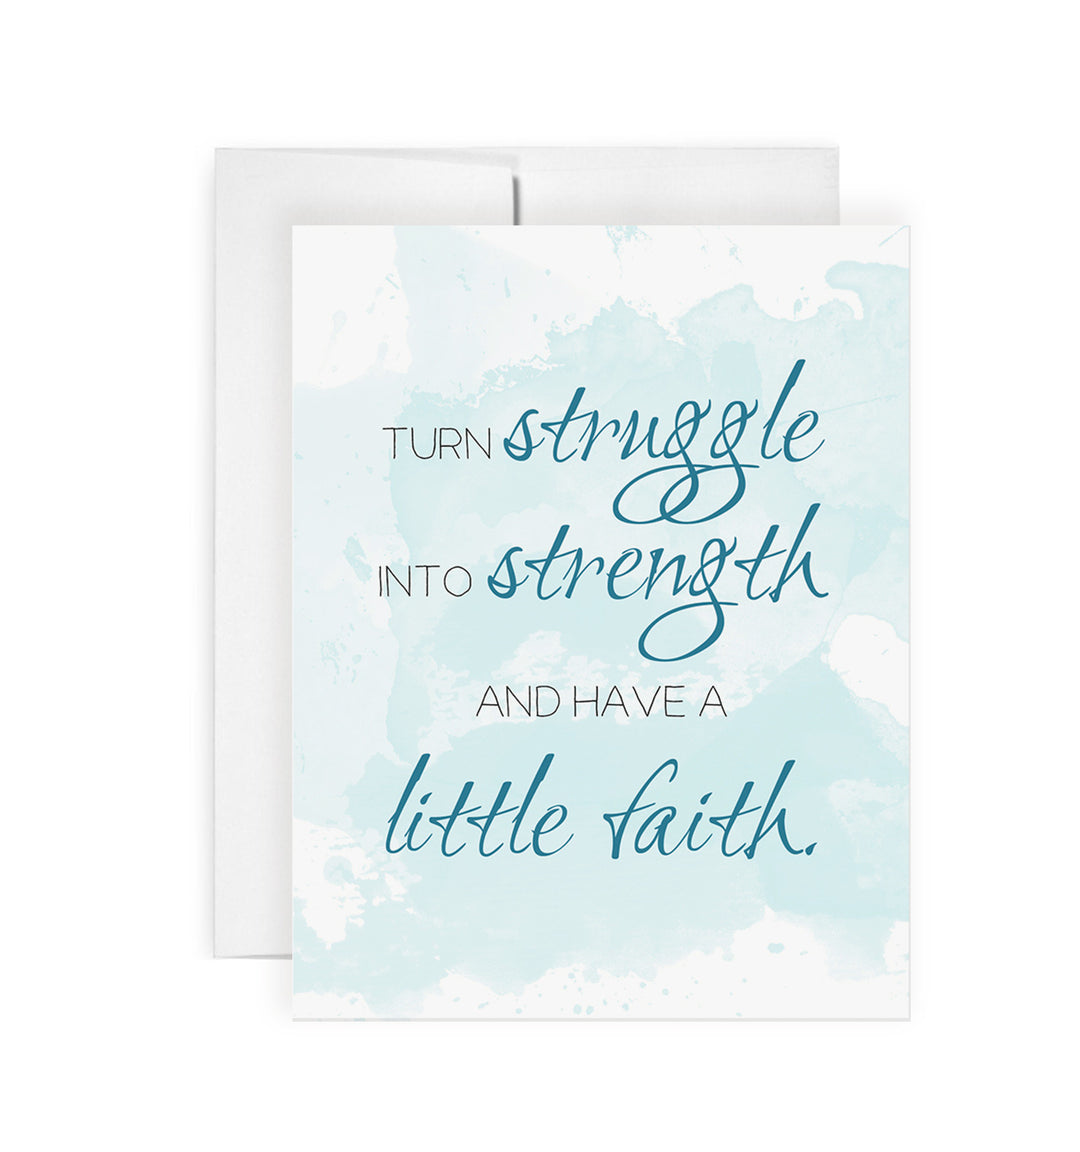 Turn Struggle into Strength